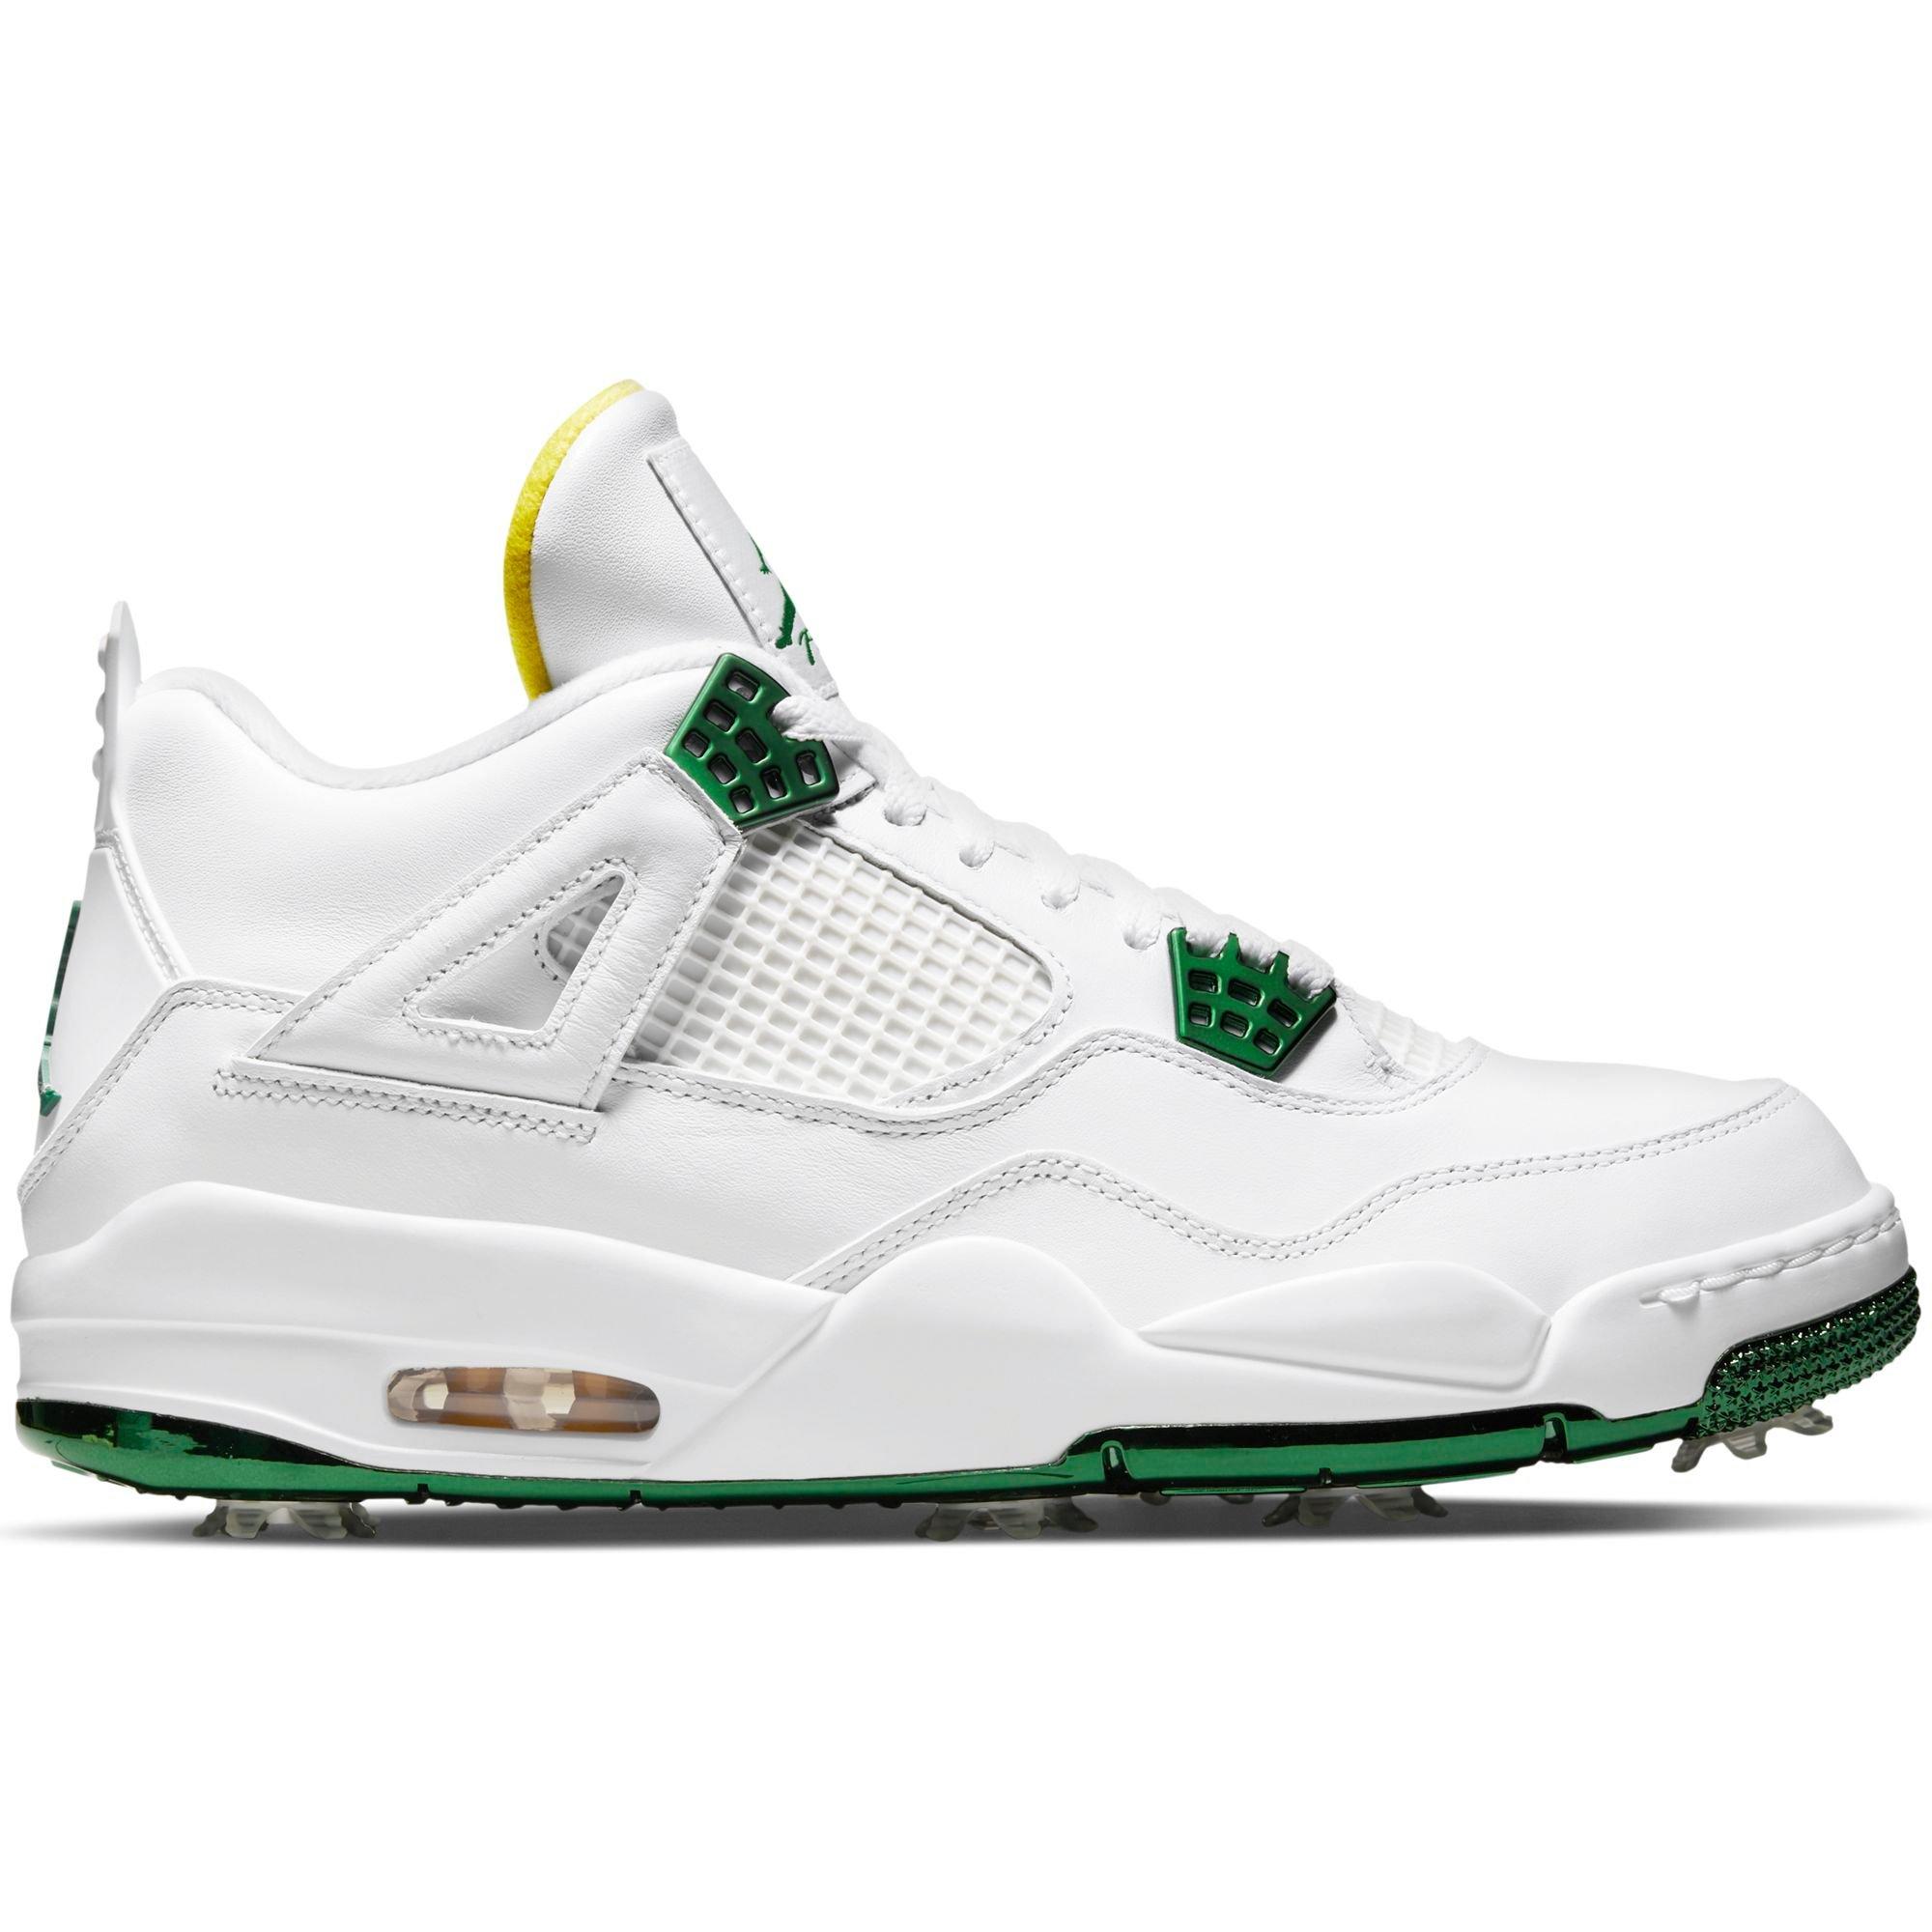 Nike Air Jordan 4 G NRG Spiked Golf Shoe -White/Yellow/Green